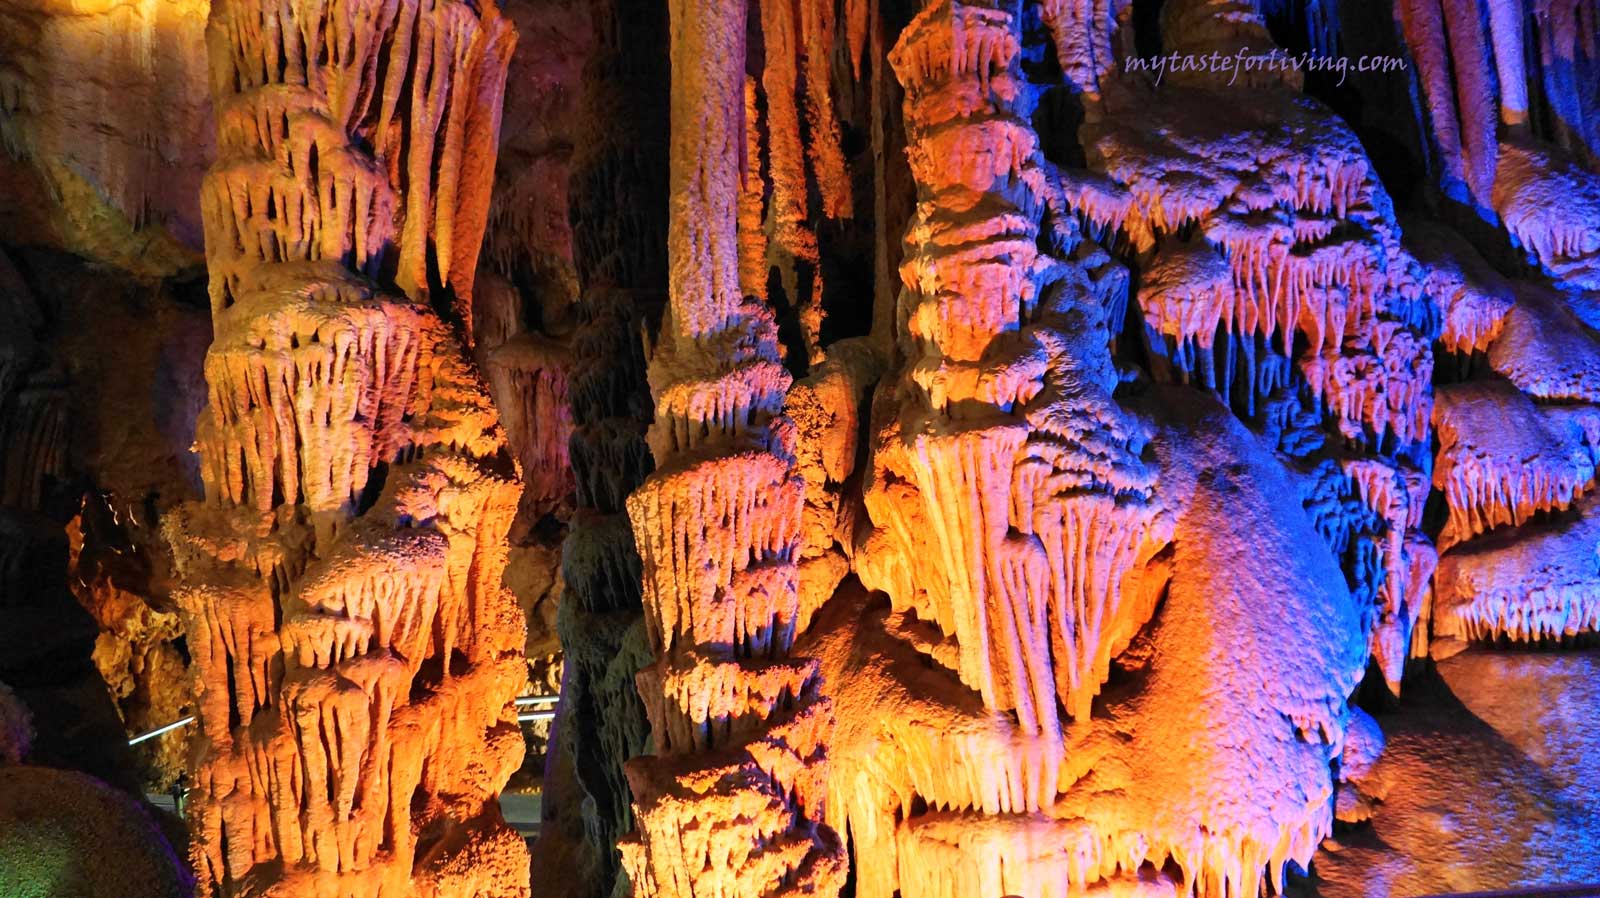 Пещера „Венеца“ е сред най-красивите пещери в България. Намира се в община Димово, област Видин, в близост до село Орешец и на около 15 км от град Белоградчик.